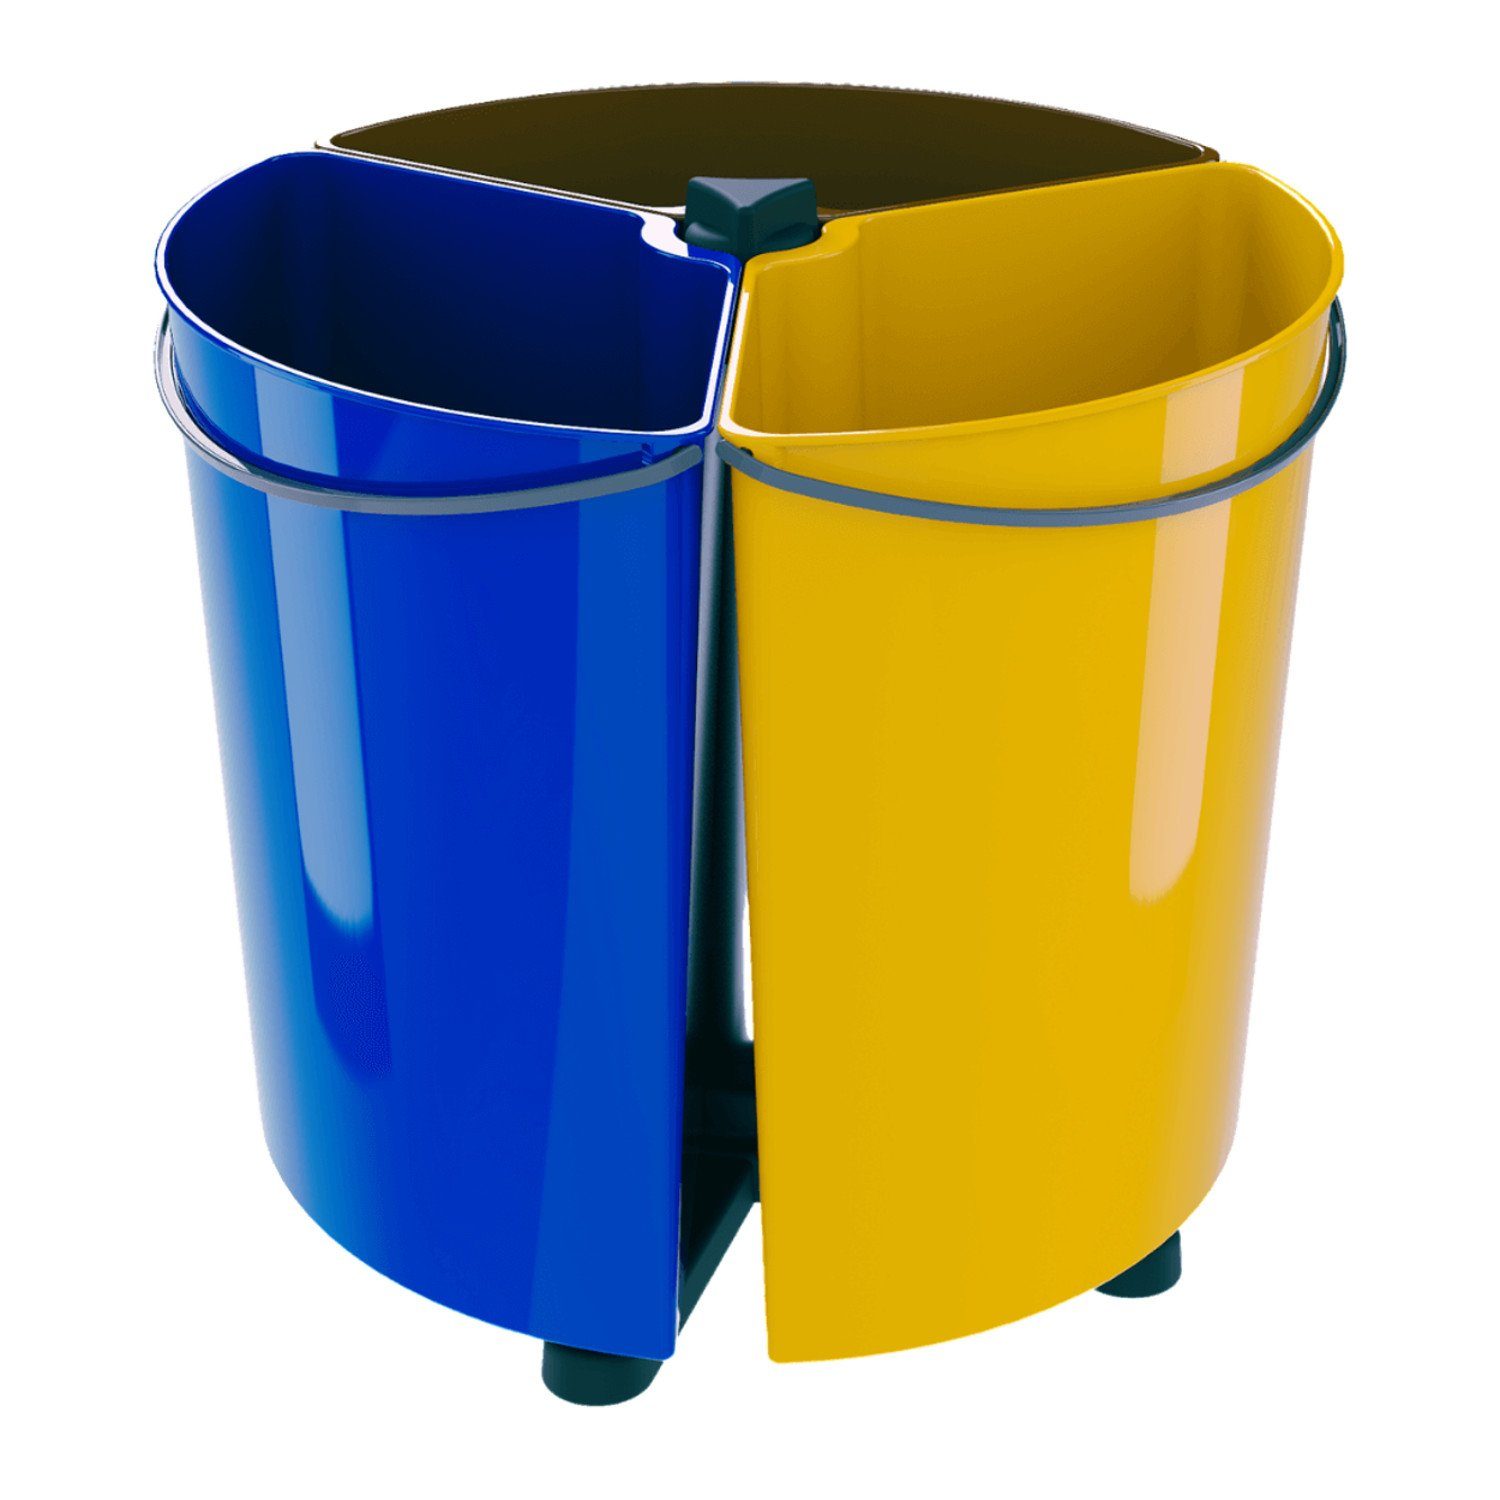 SMARTECO Mülleimer, Drehbarer runder Sortierabfallbehälter Recycling ECO 3x 11.7L